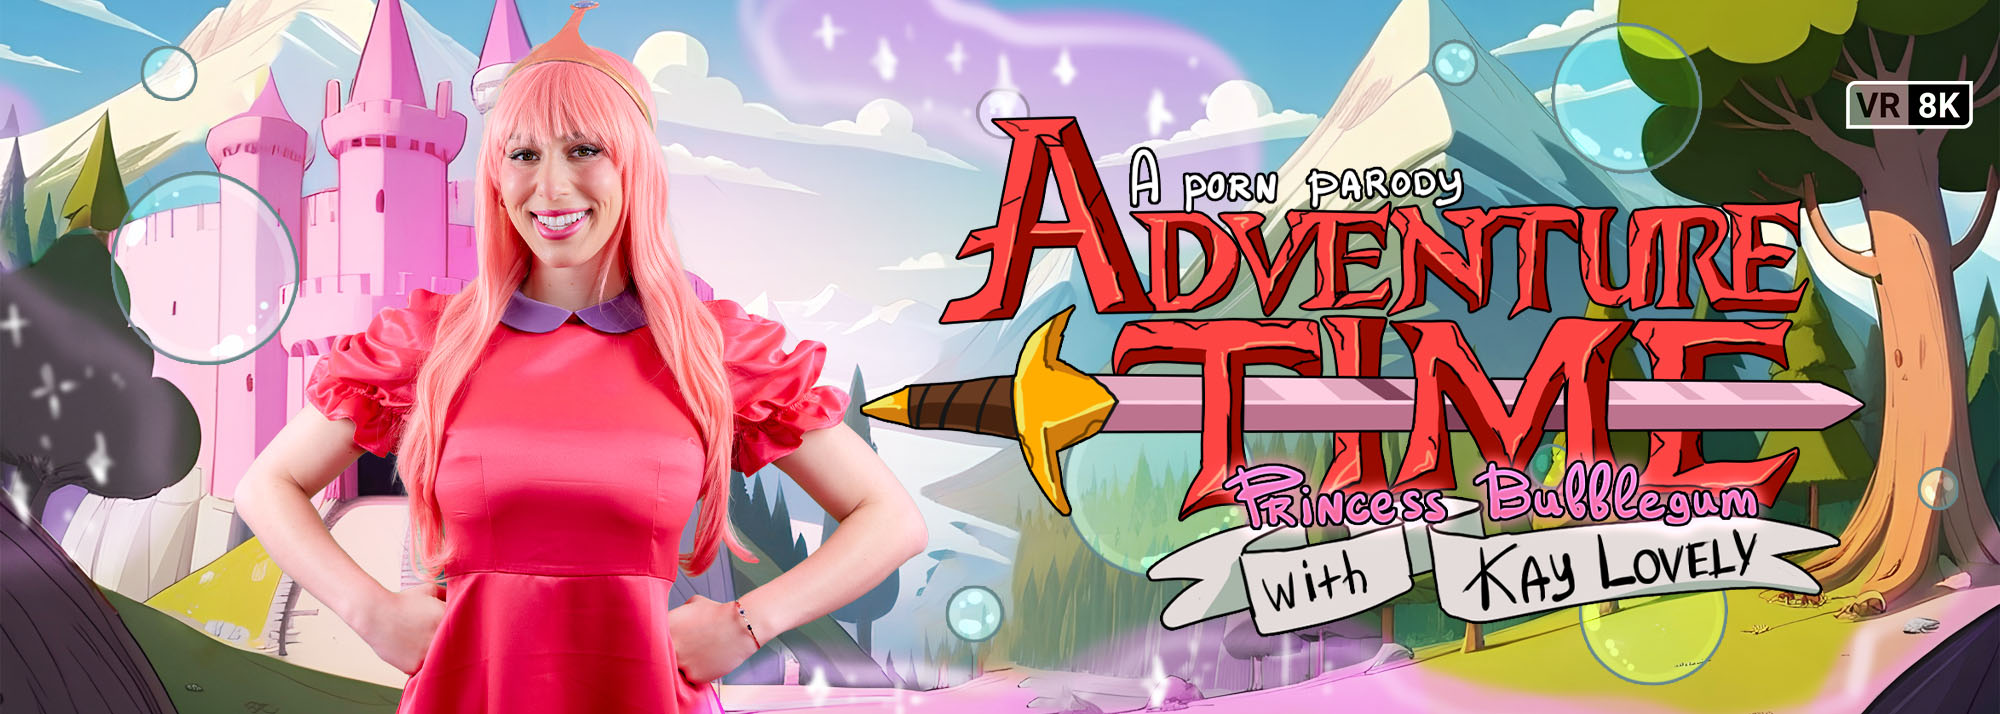 Adventure Time: Princess Bubblegum (A Porn Parody) - VR Video, Starring: Kay Lovely